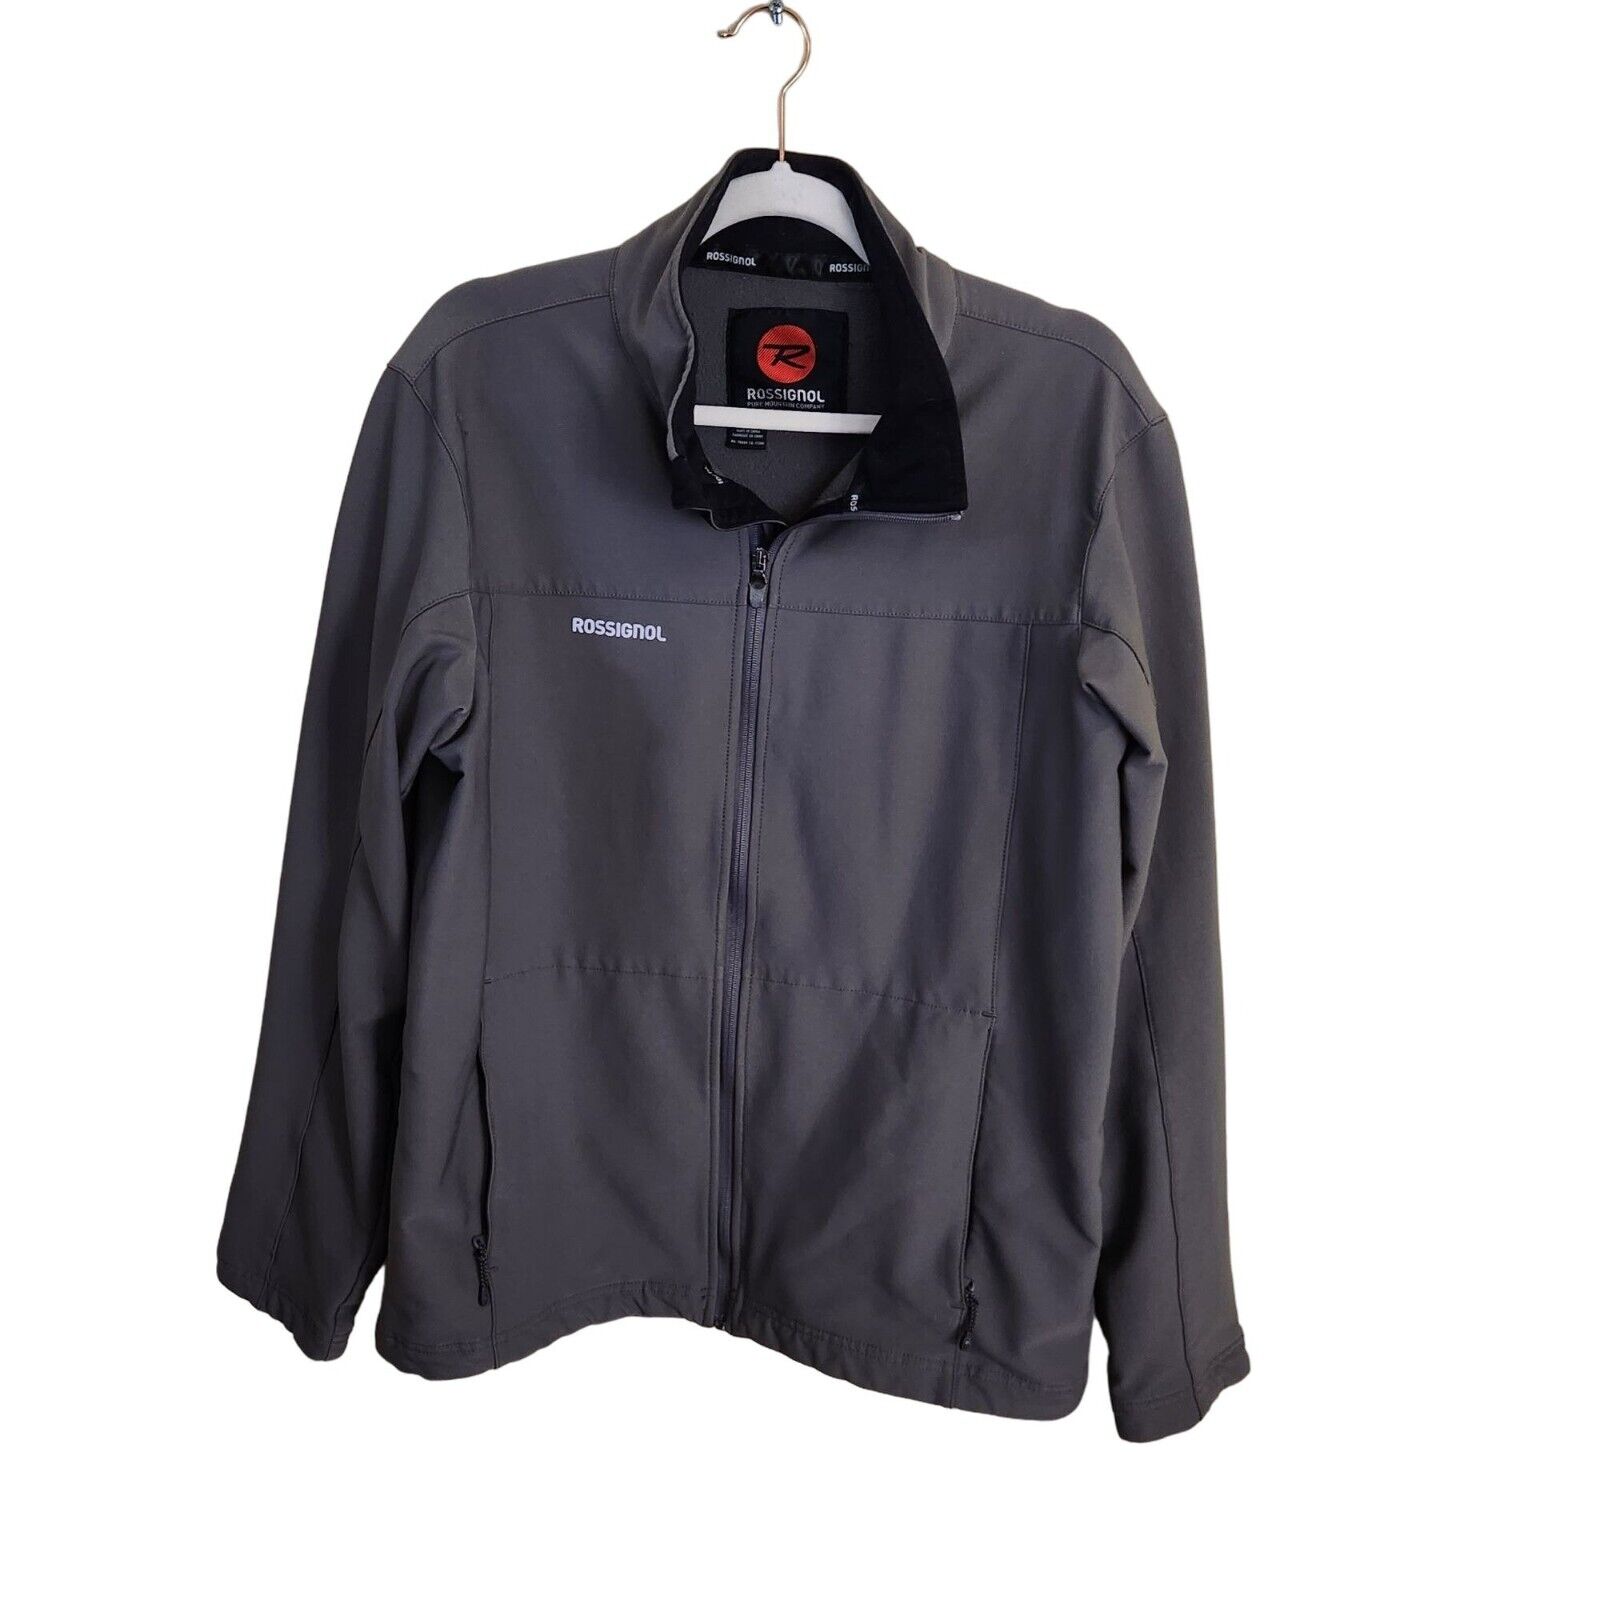 Rossignol Lake Placid Soft Shell Performance Jacket Gray Unisex Size L